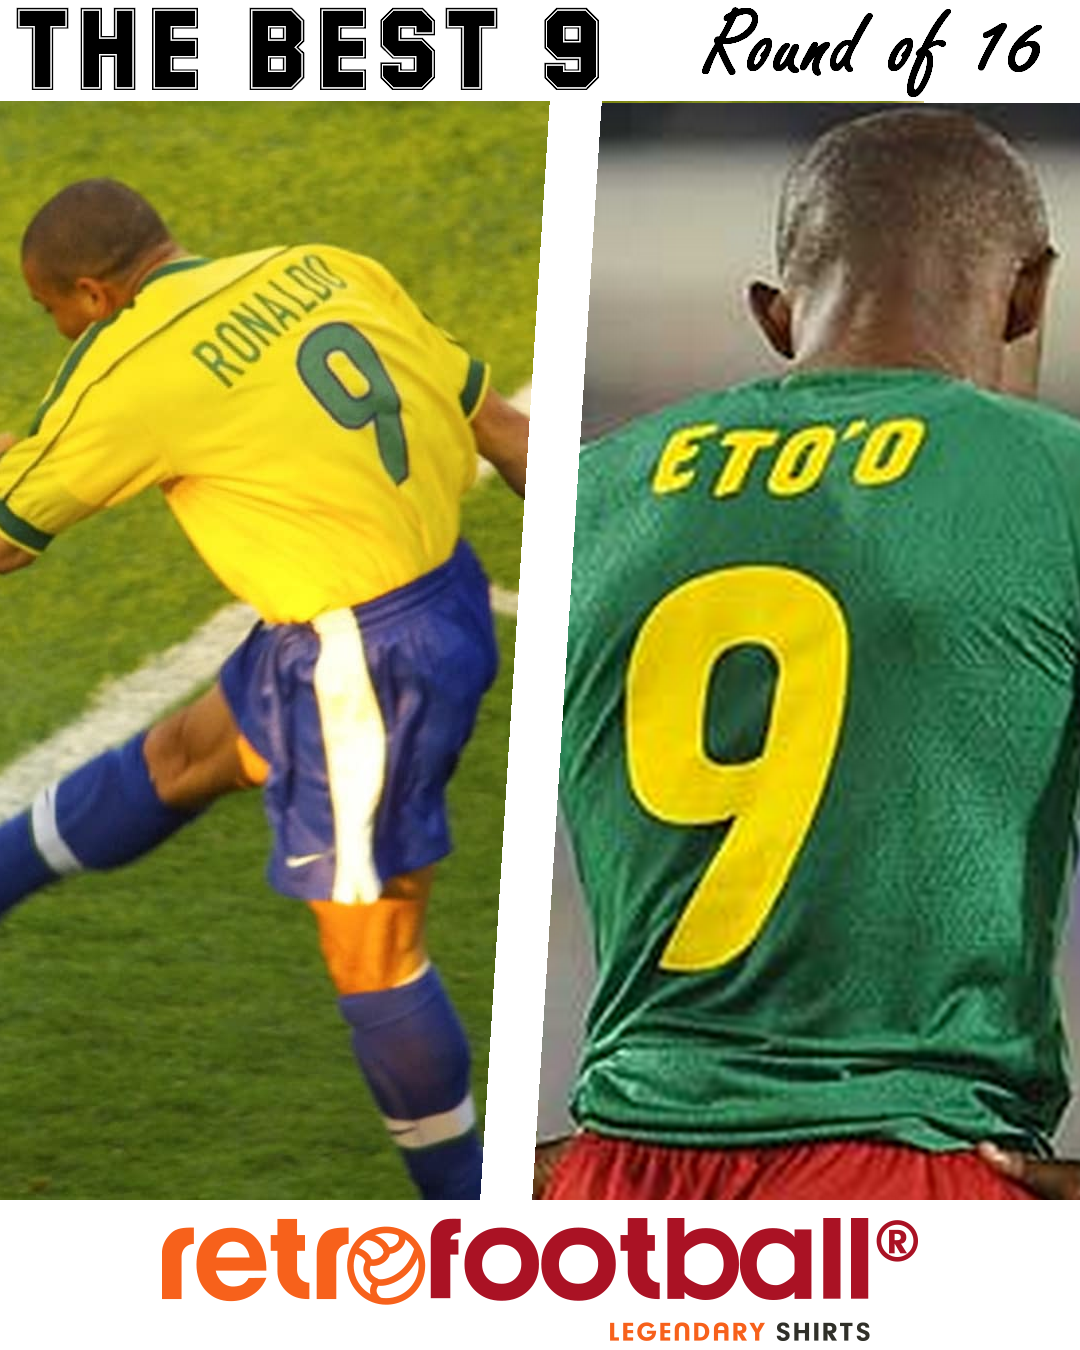 The best 9 - Ronaldo vs. Eto'o